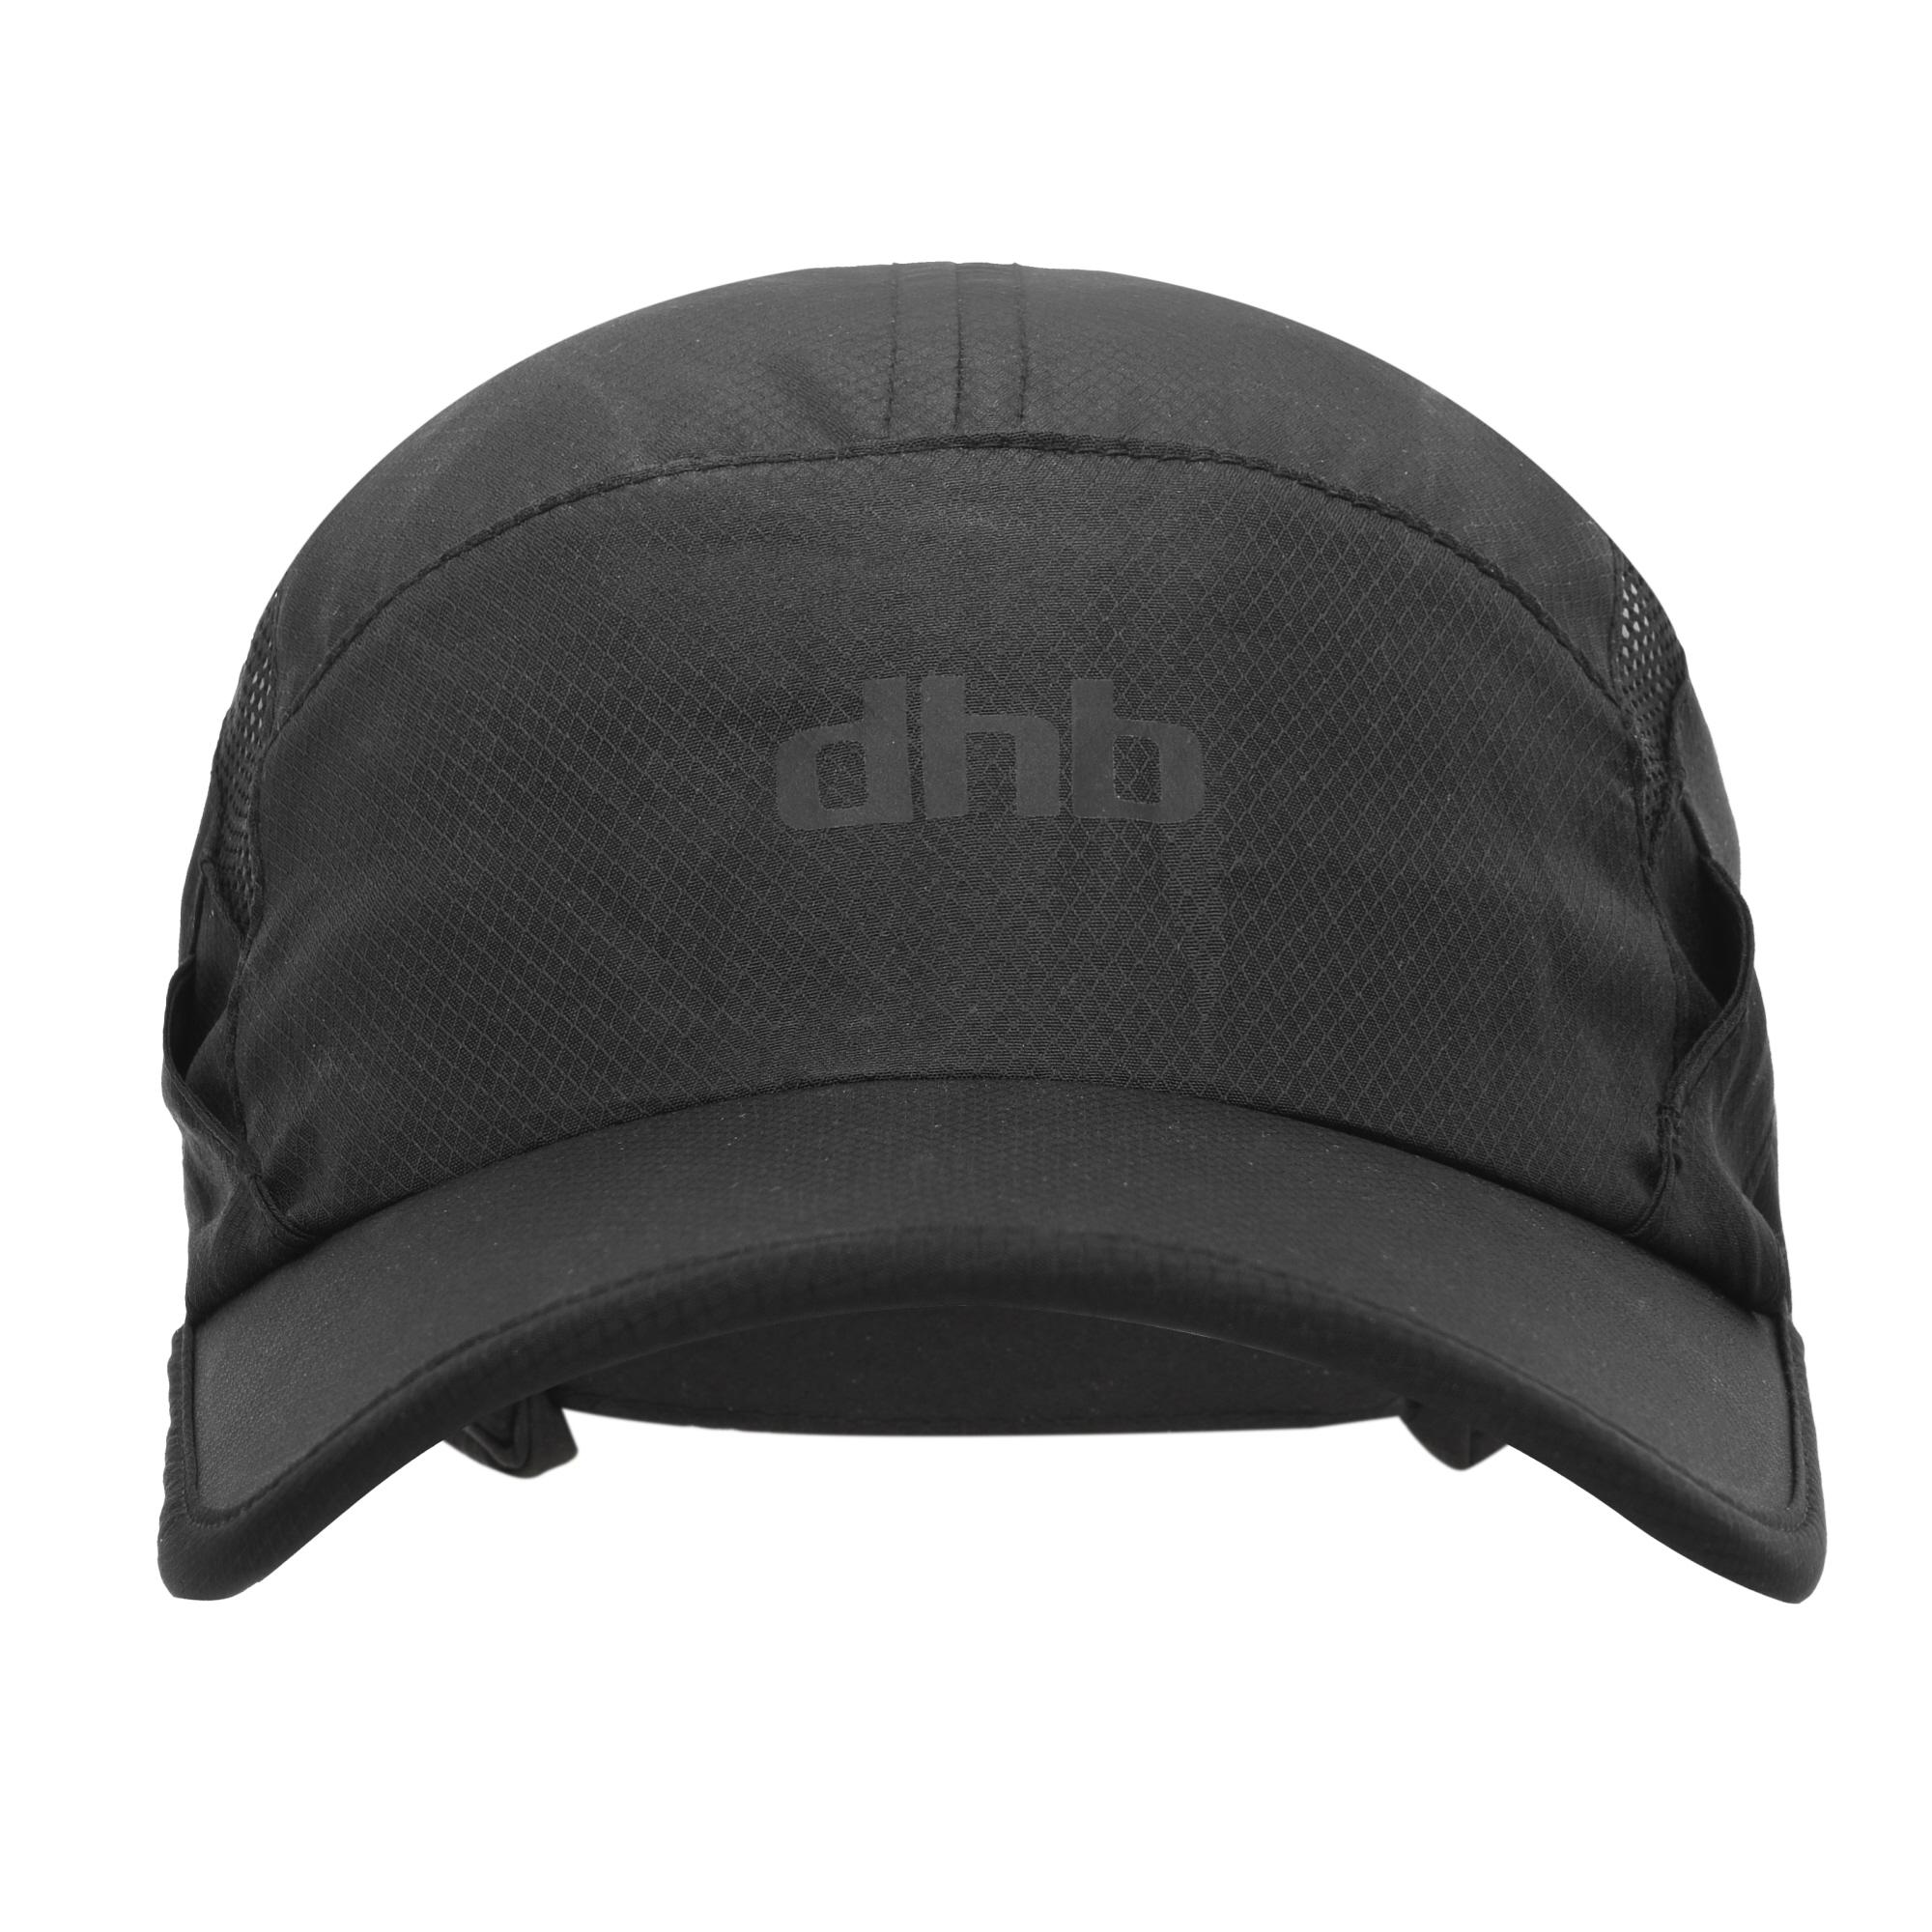 Dhb Run Cap - Black